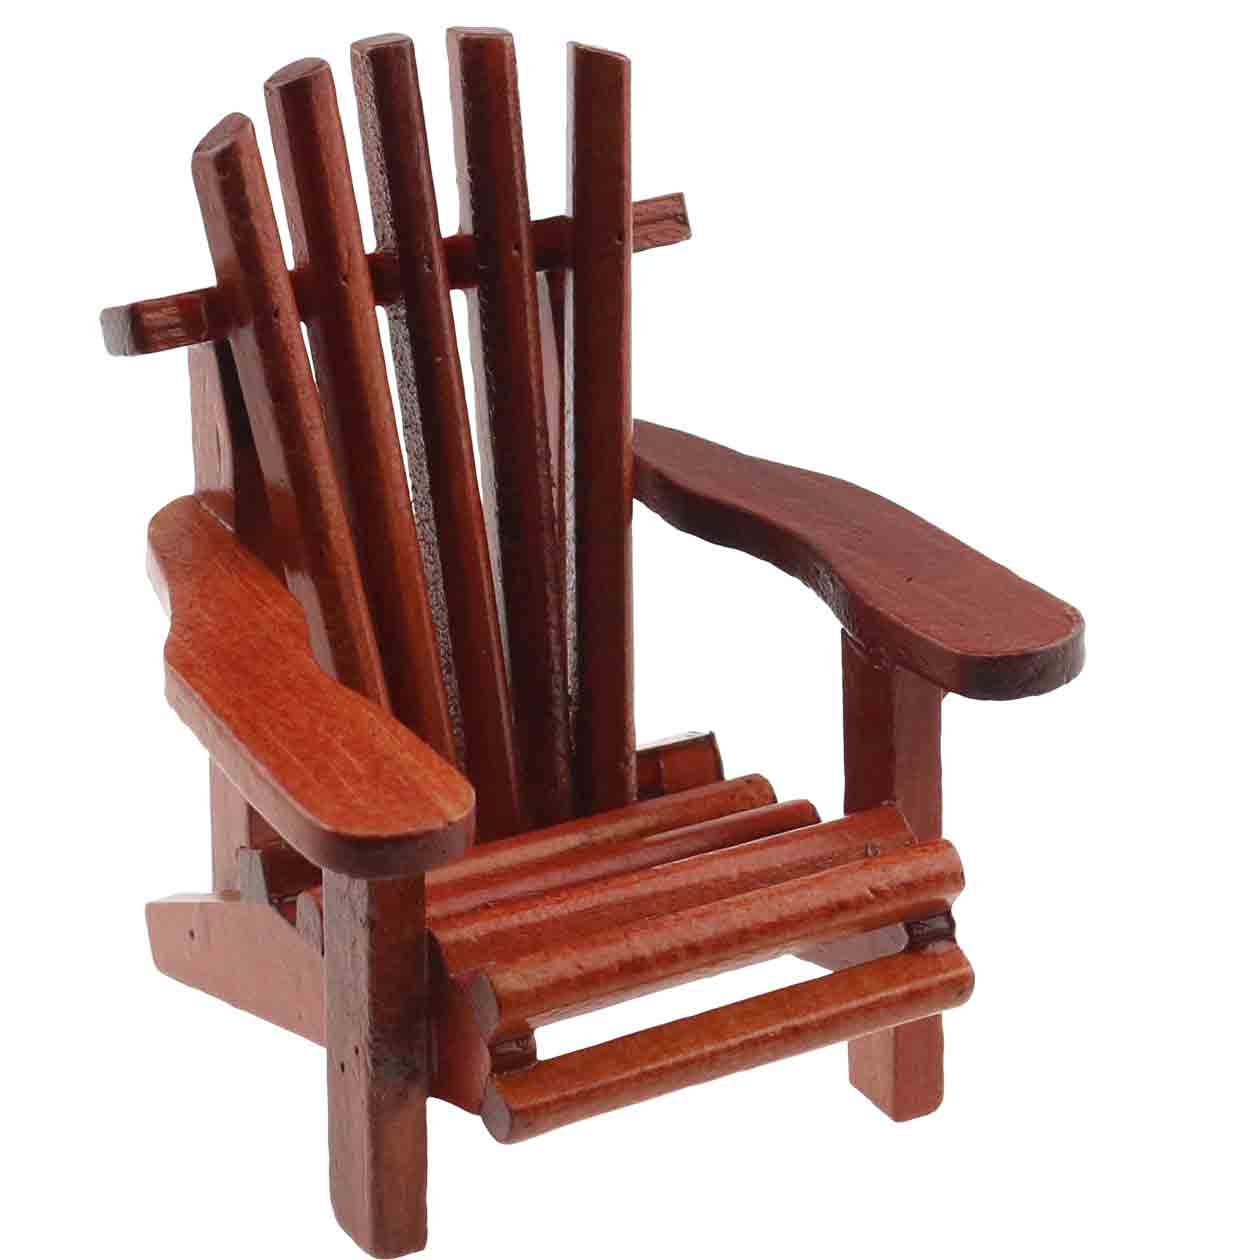 Adirondack Chair Ornament